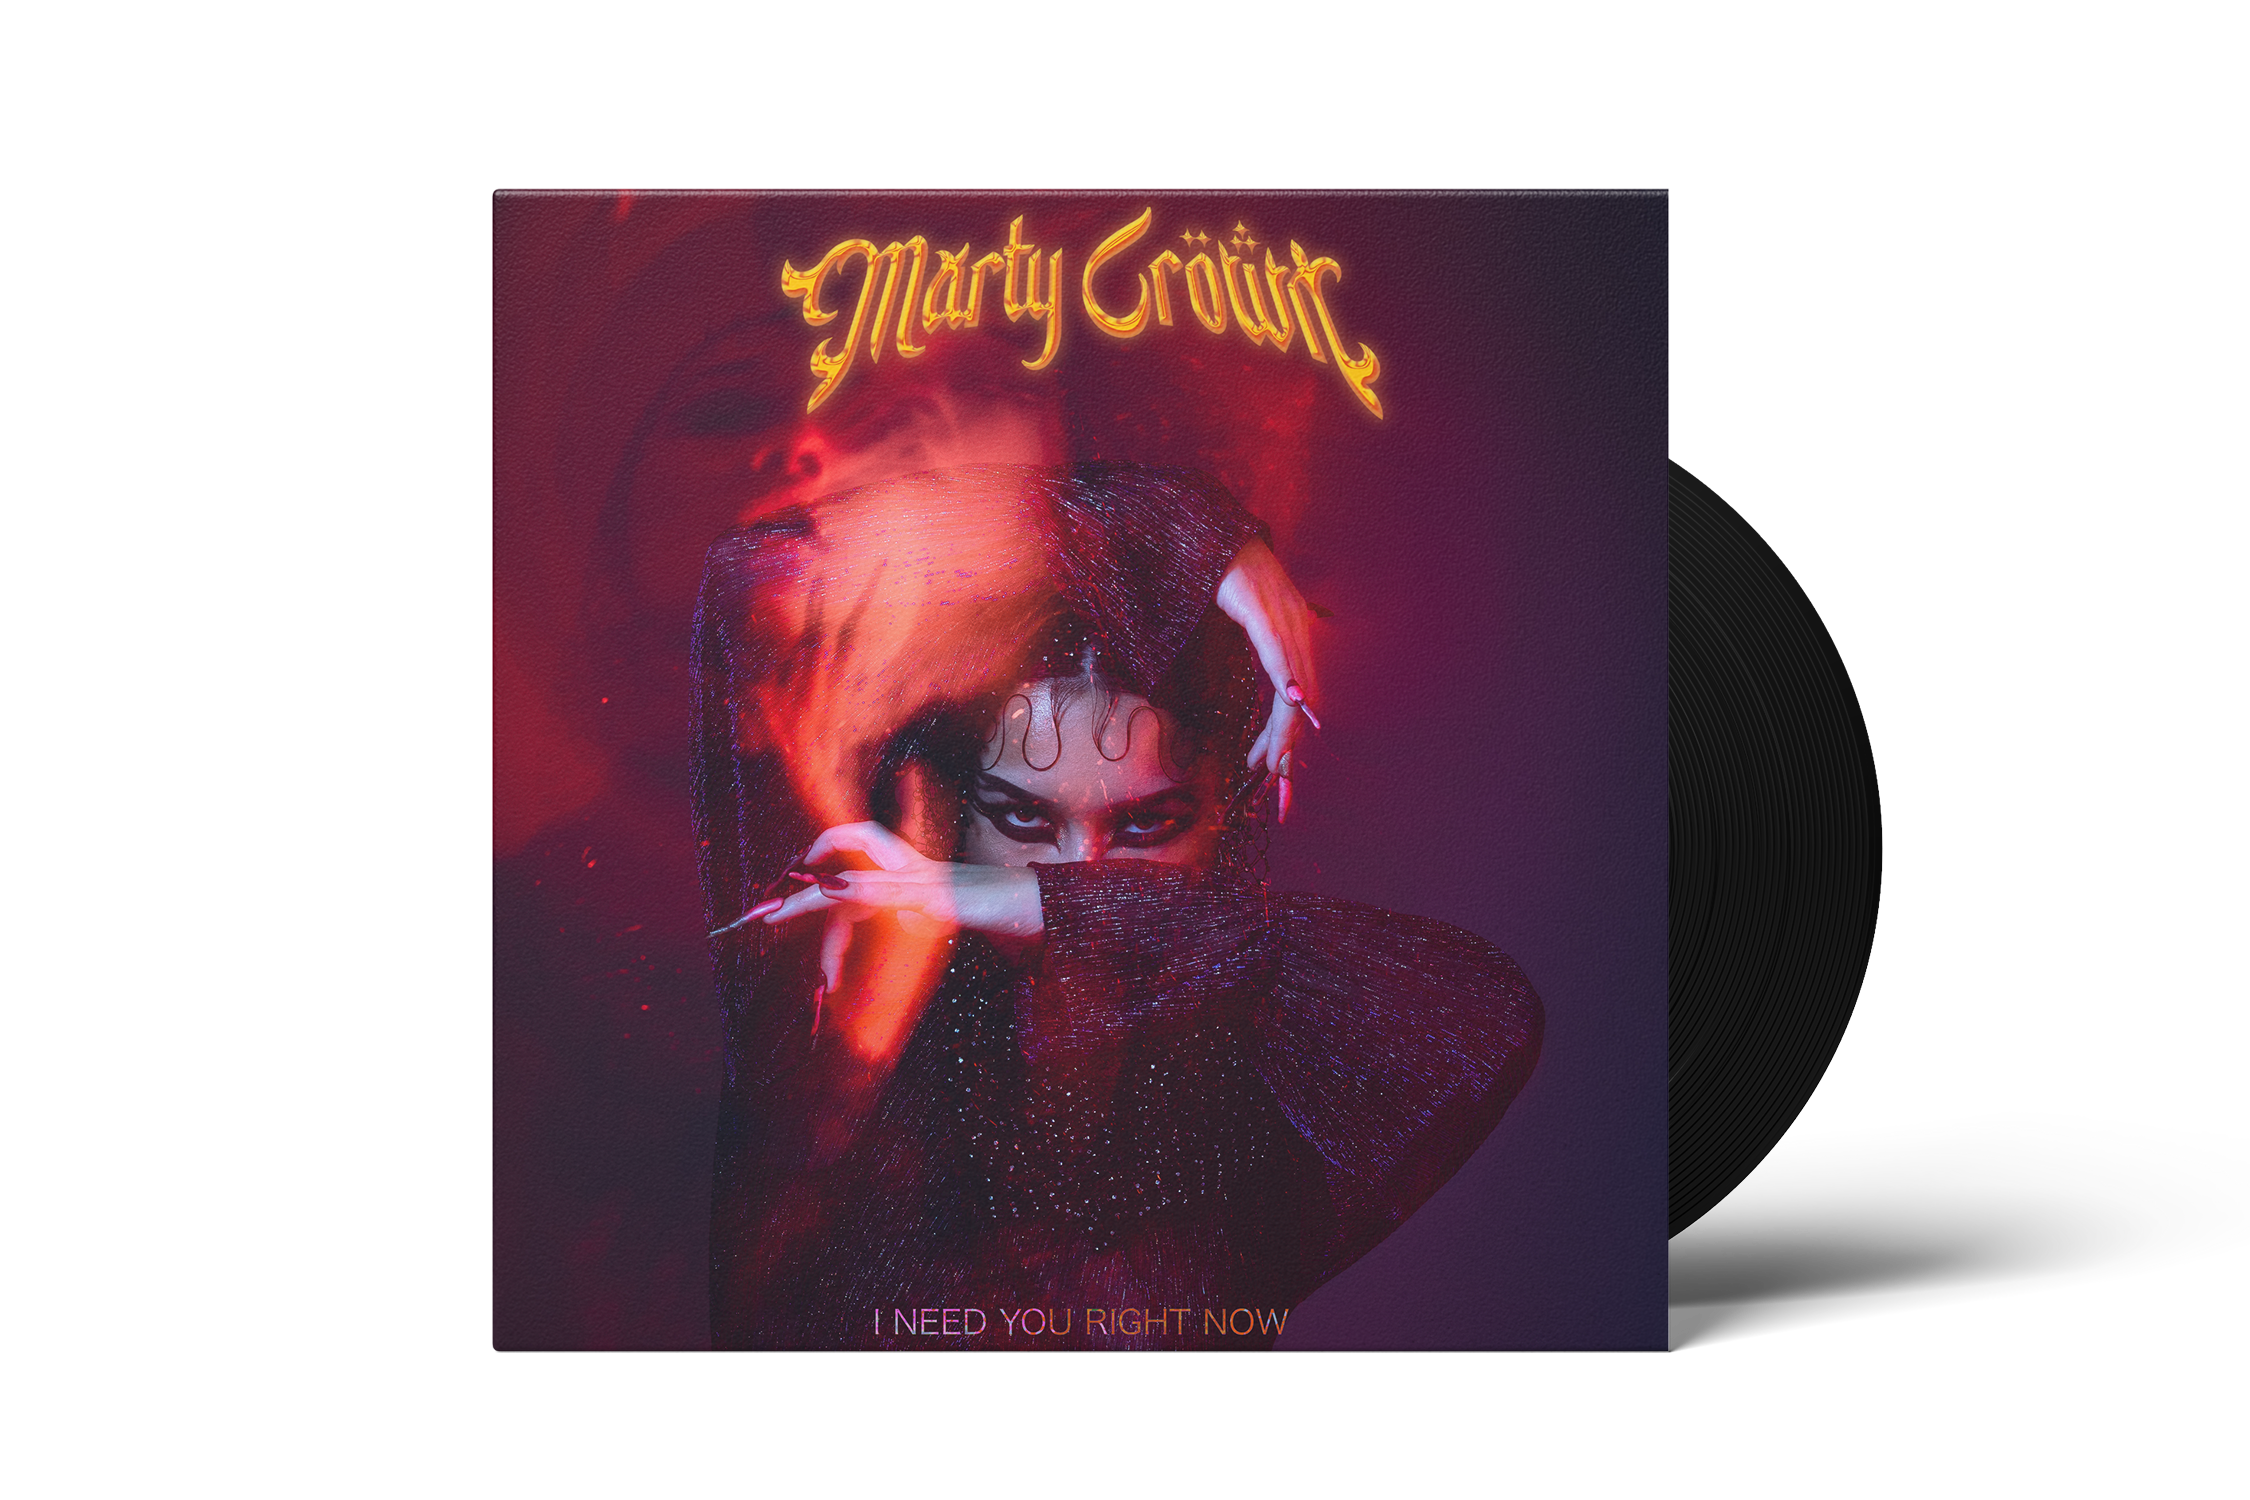 ALBUM RELEASE: MARTY CROWN - GEM STORE